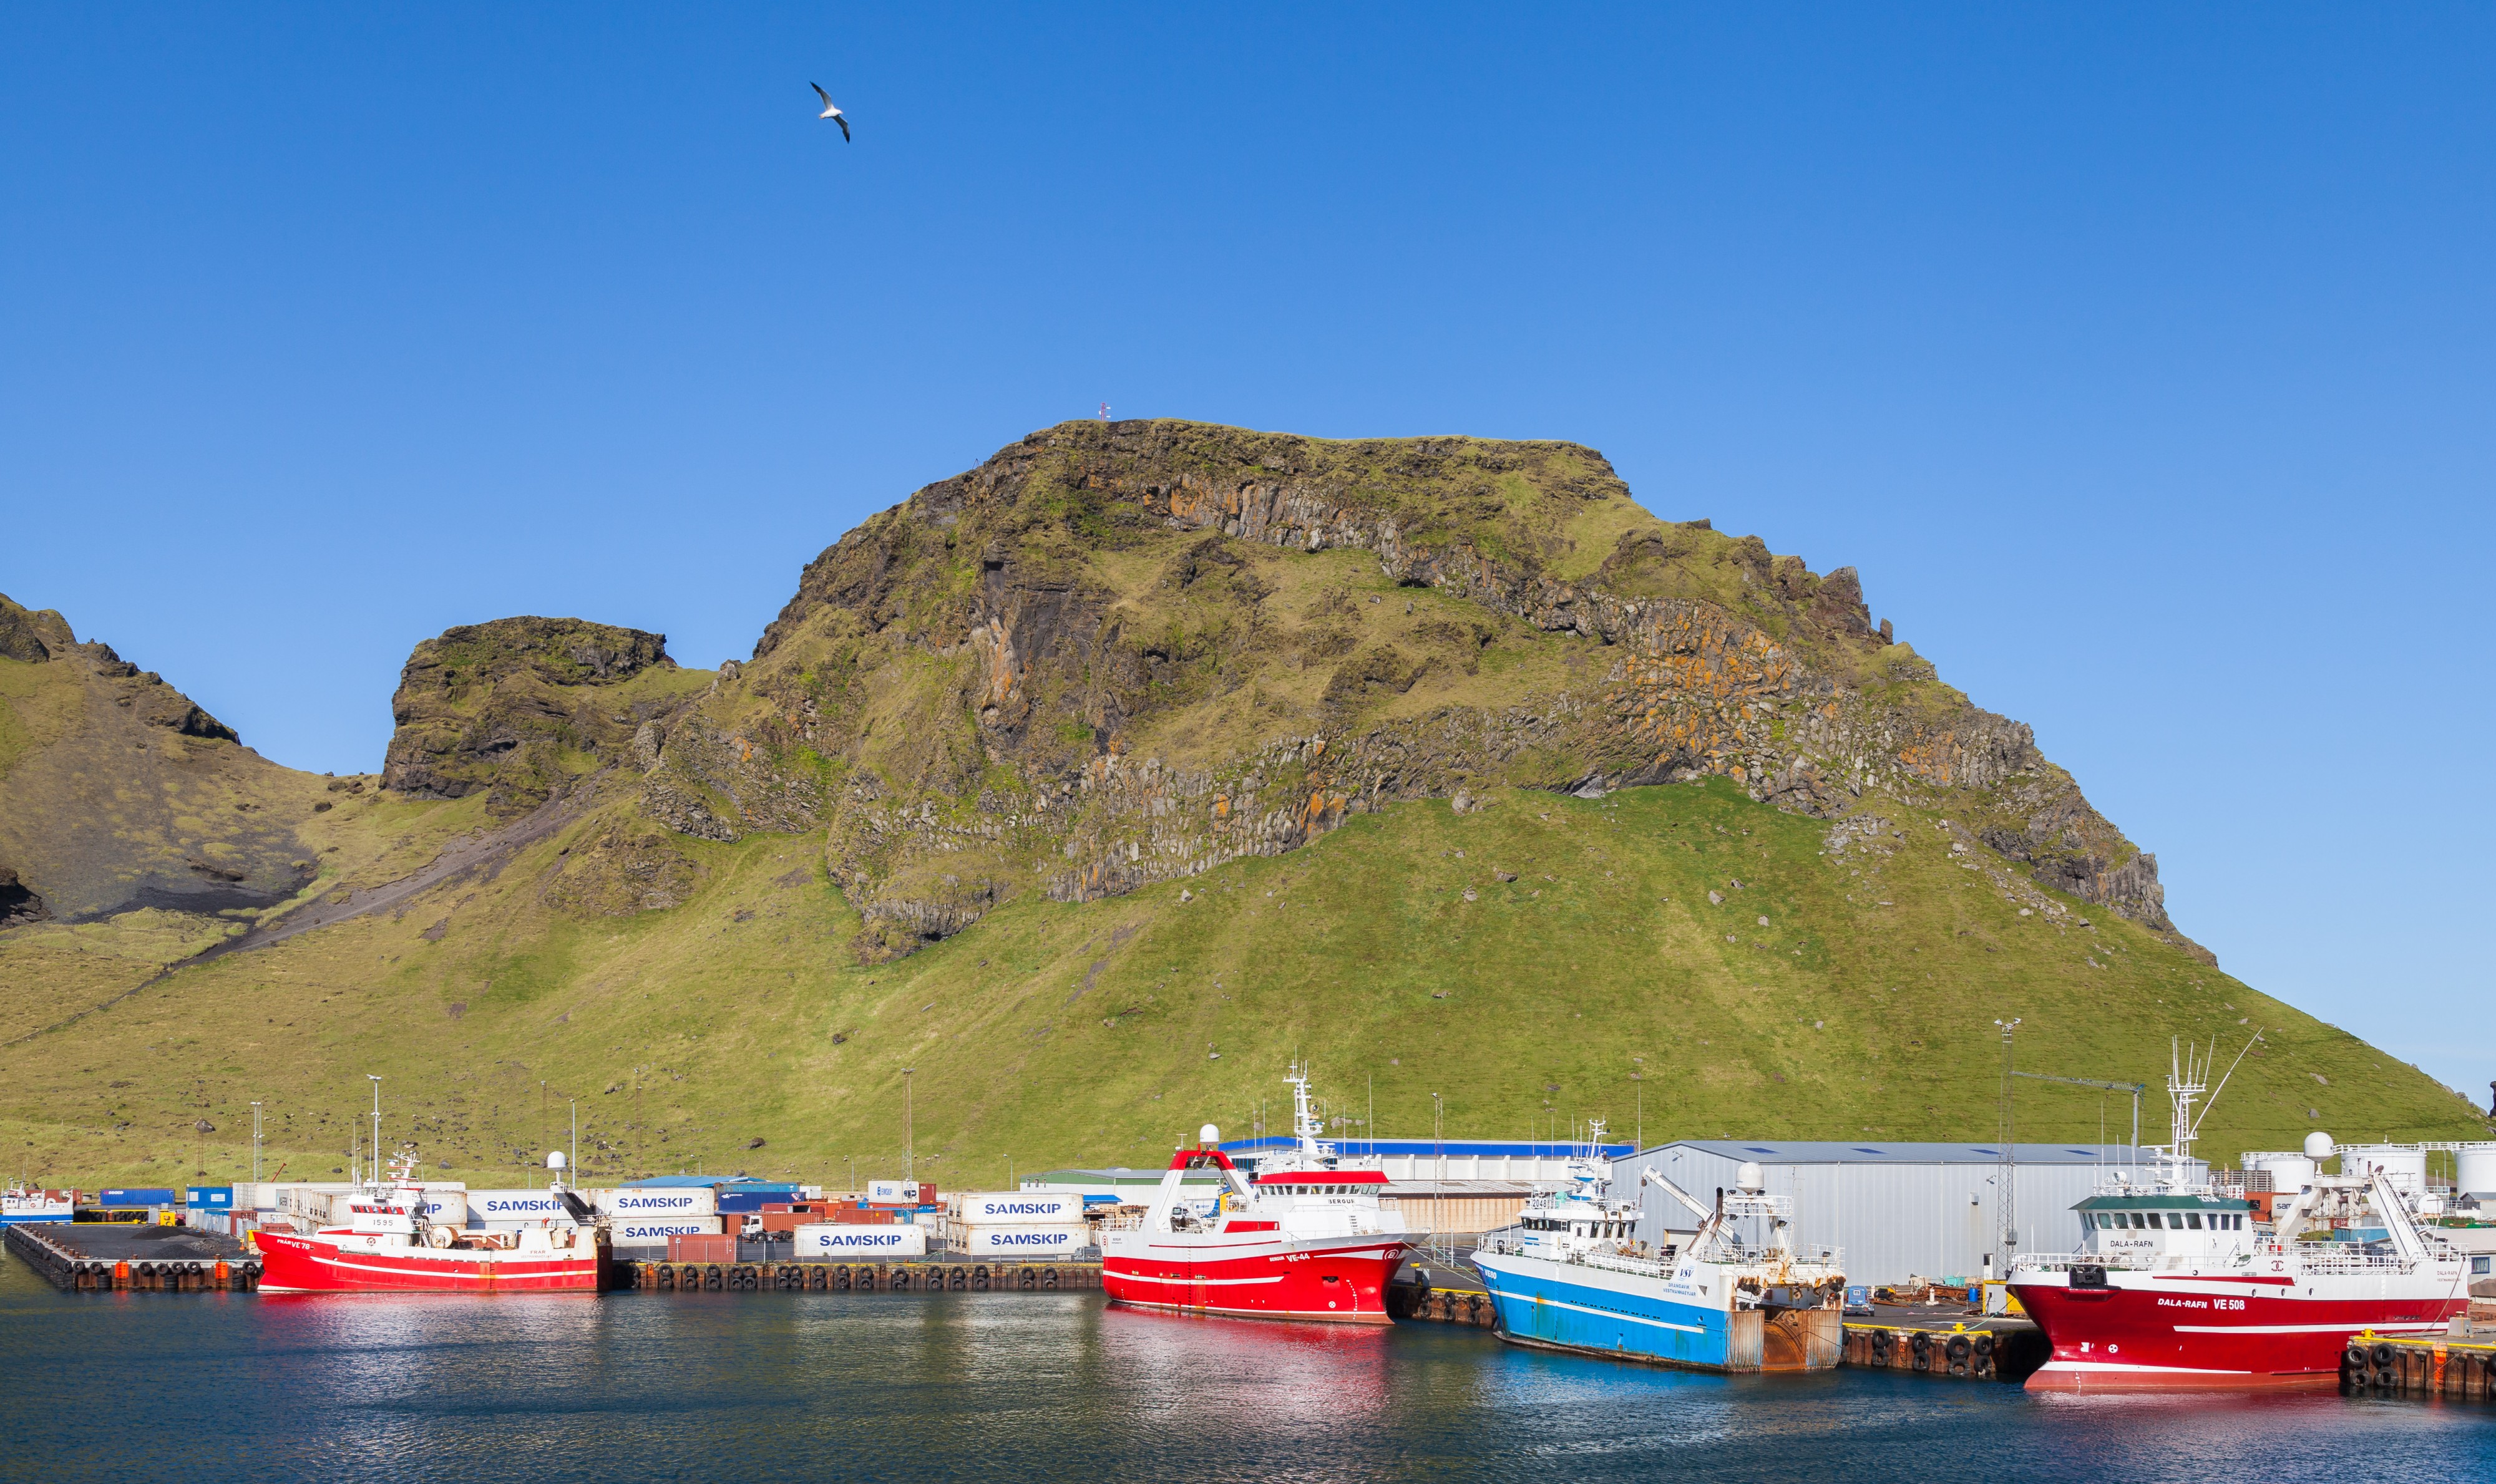 Puerto de Vestmannaeyjar, Heimaey, Islas Vestman, Suðurland, Islandia, 2014-08-17, DD 015